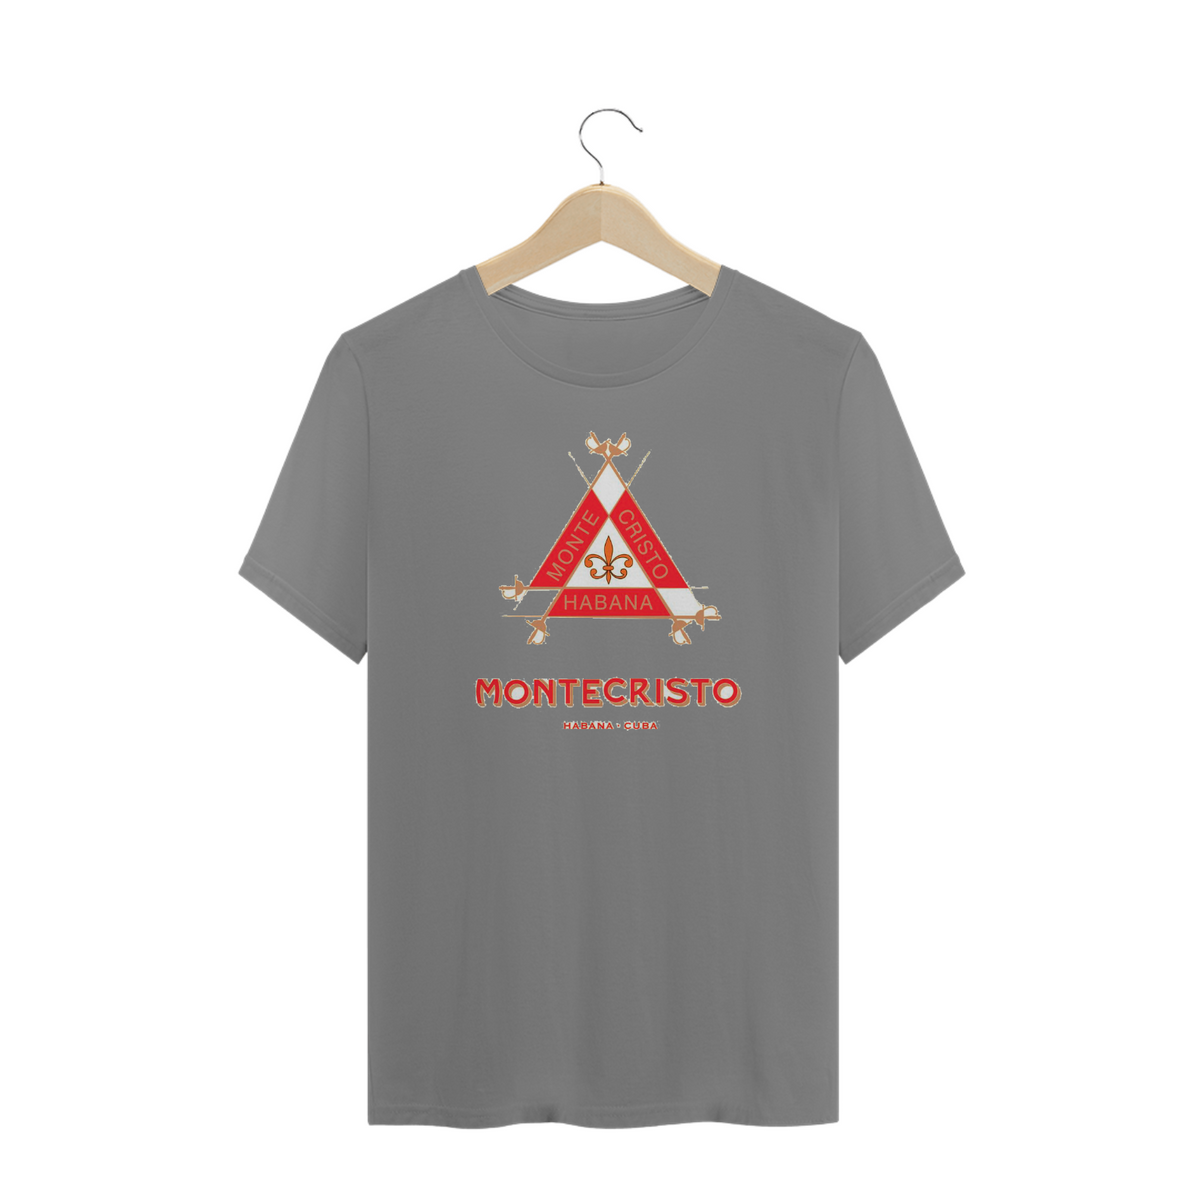 Nome do produto: Camiseta Monte Cristo Habanos